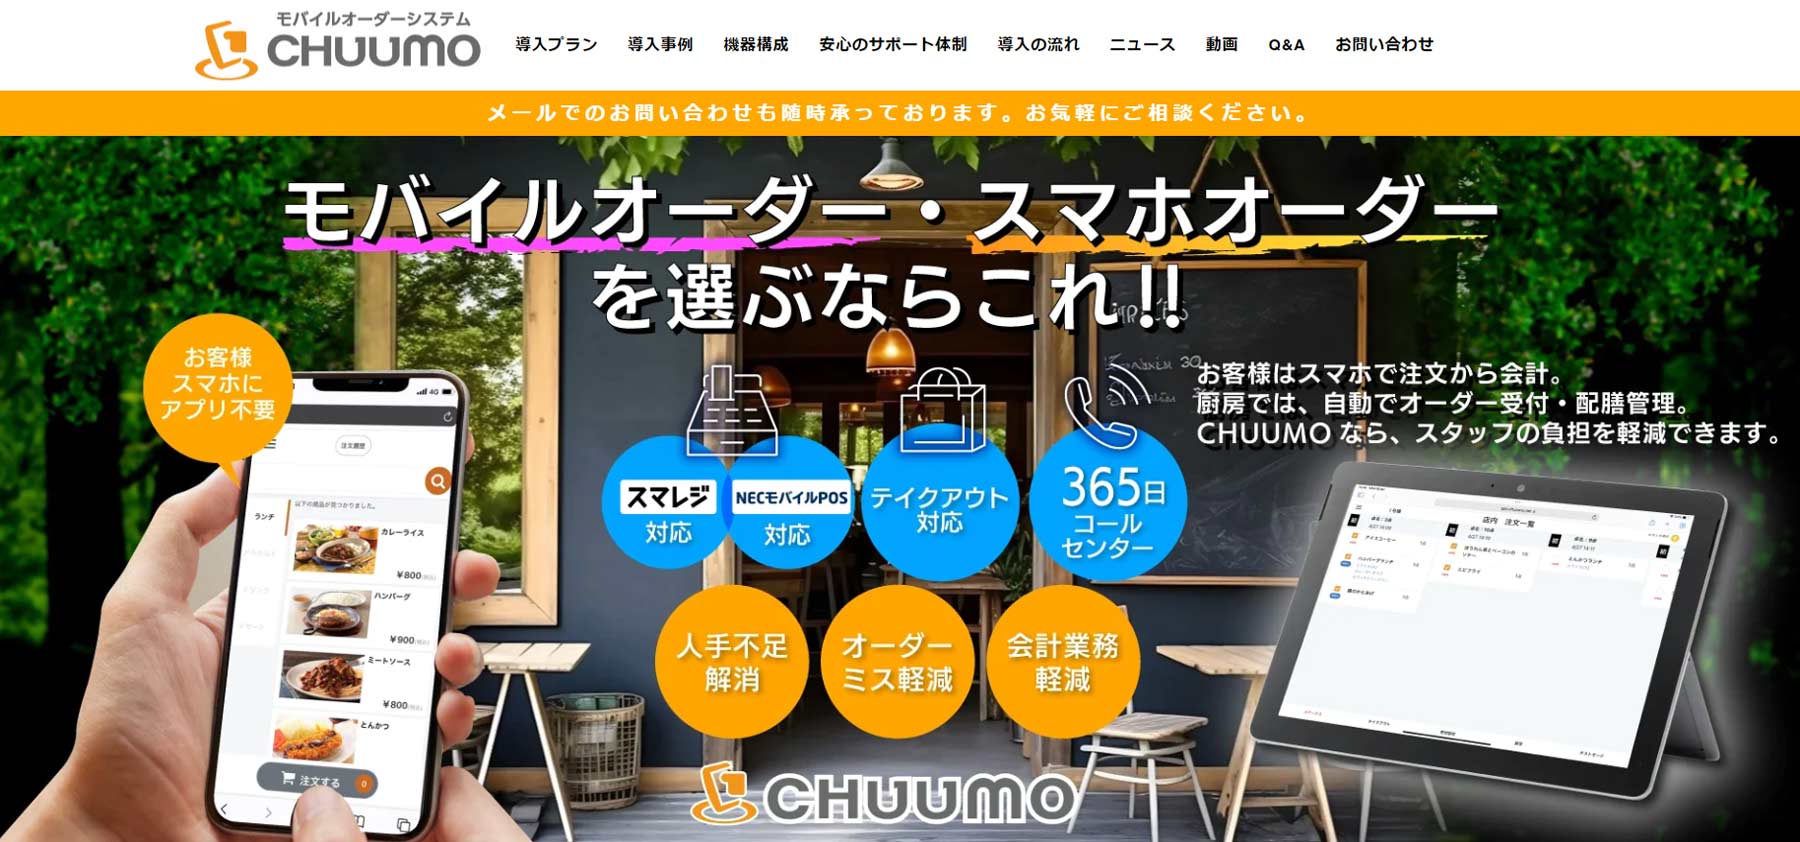 CHUUMO公式Webサイト